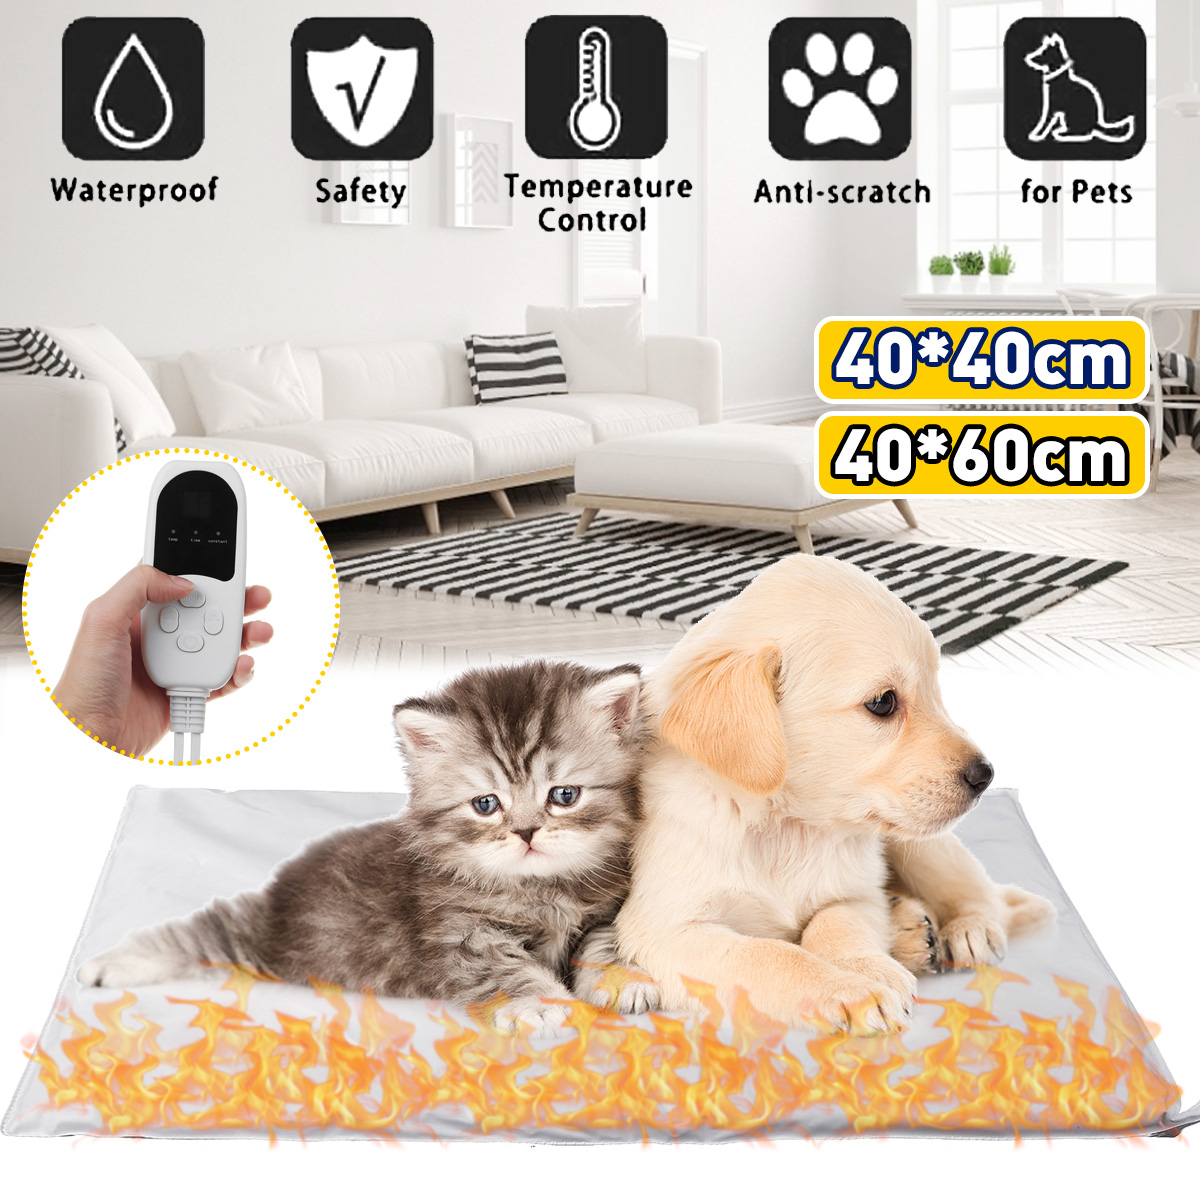 Electric-Pet-Heat-Mat-Heated-Heating-Pad-Blanket-Dog-Cat-Waterproof-1914356-1